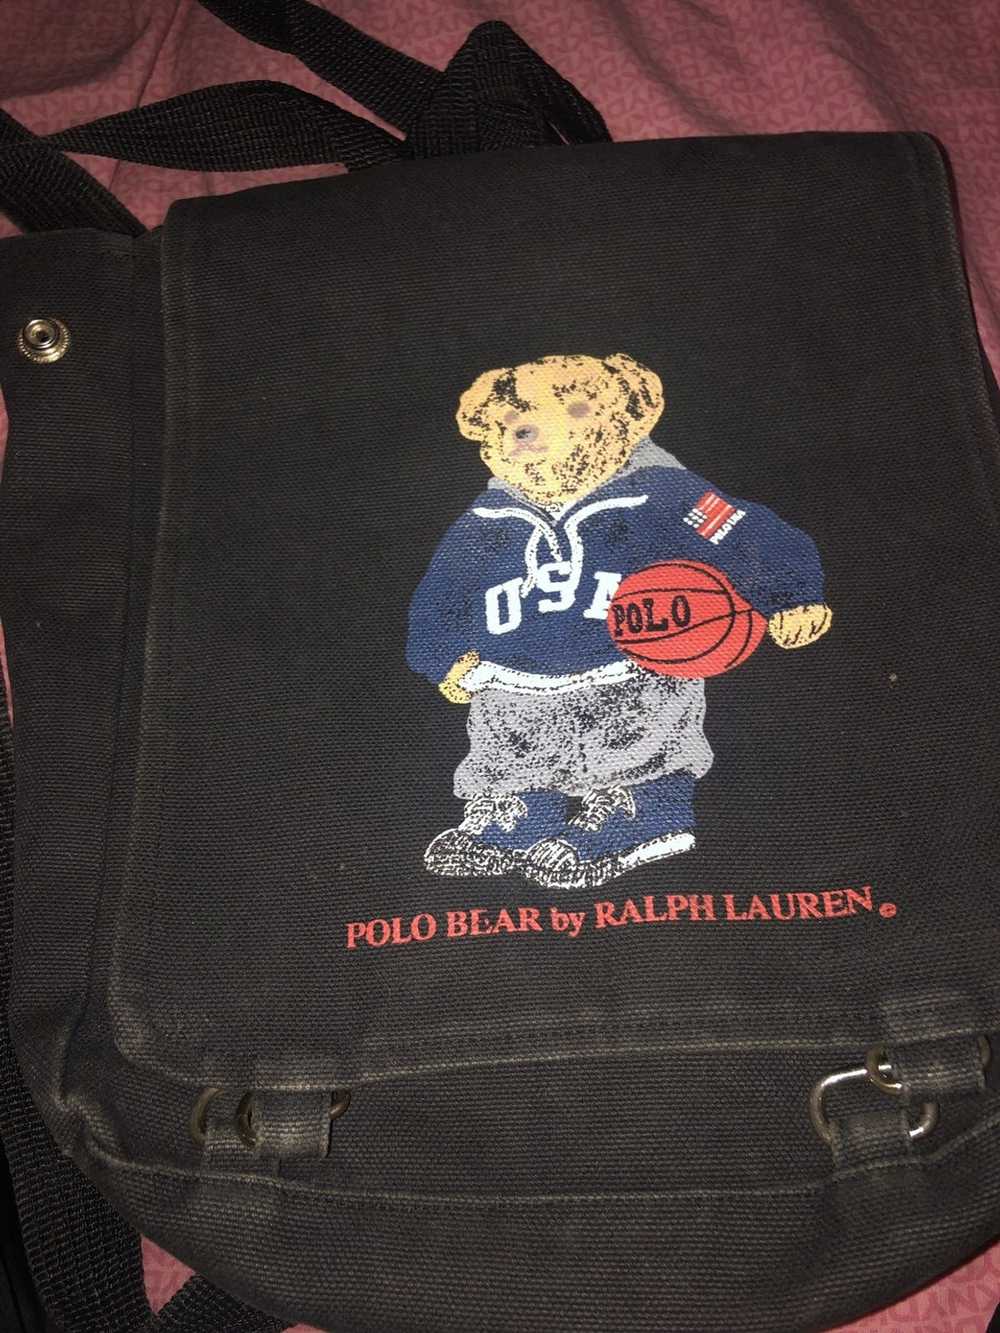 Ralph Lauren Ralph bear vintage backpack - image 2